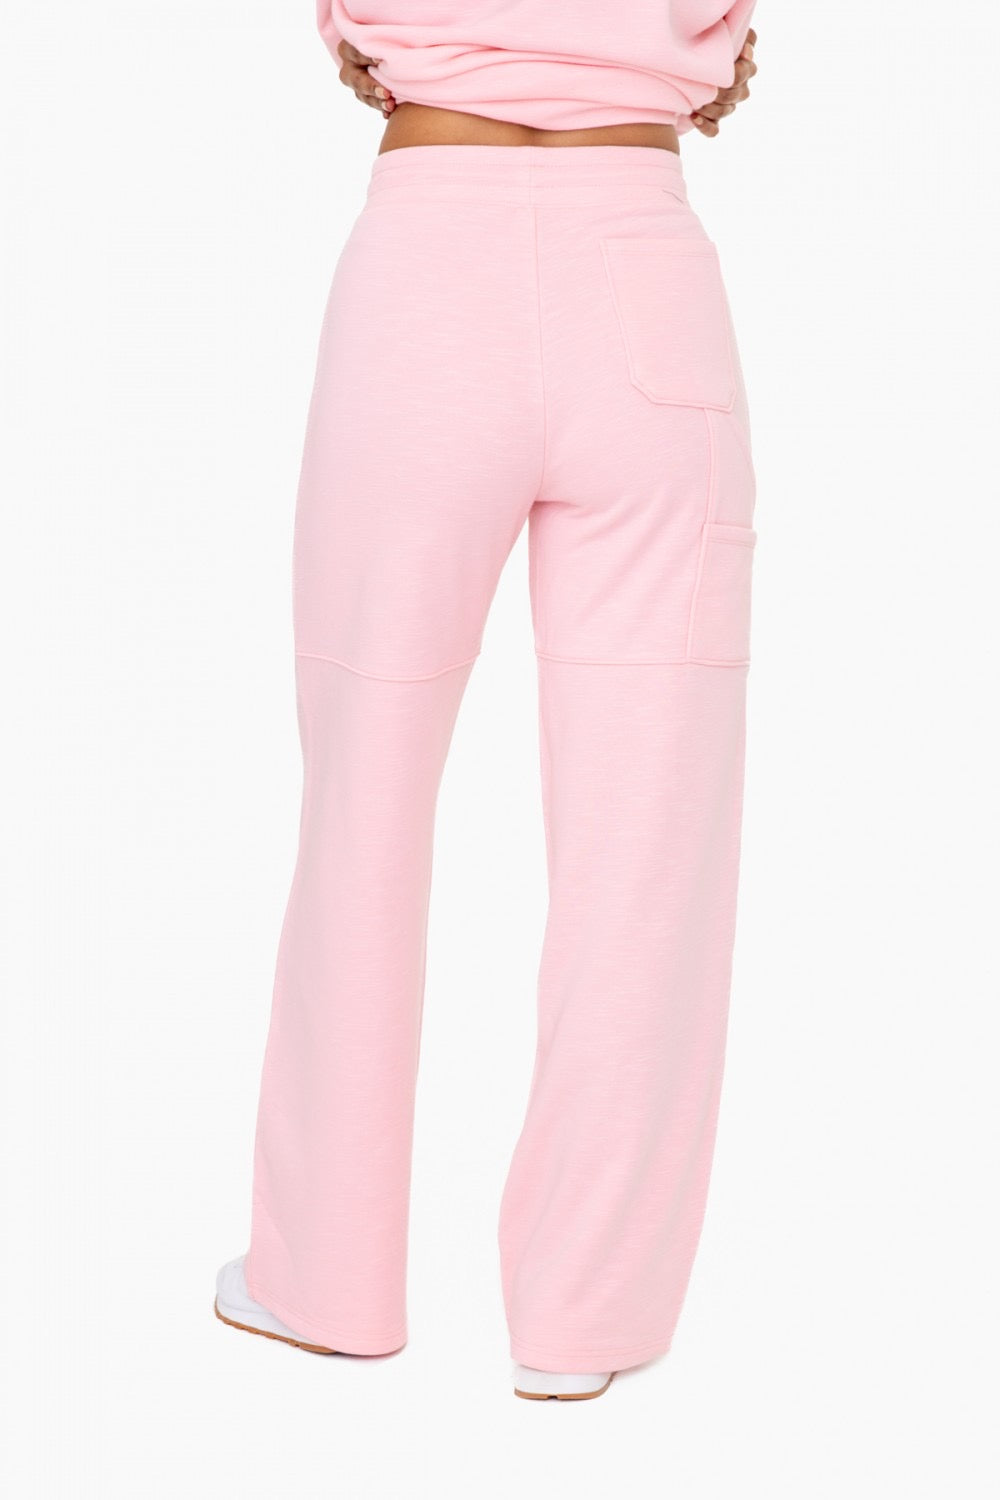 Candy Pink Lounge Pants